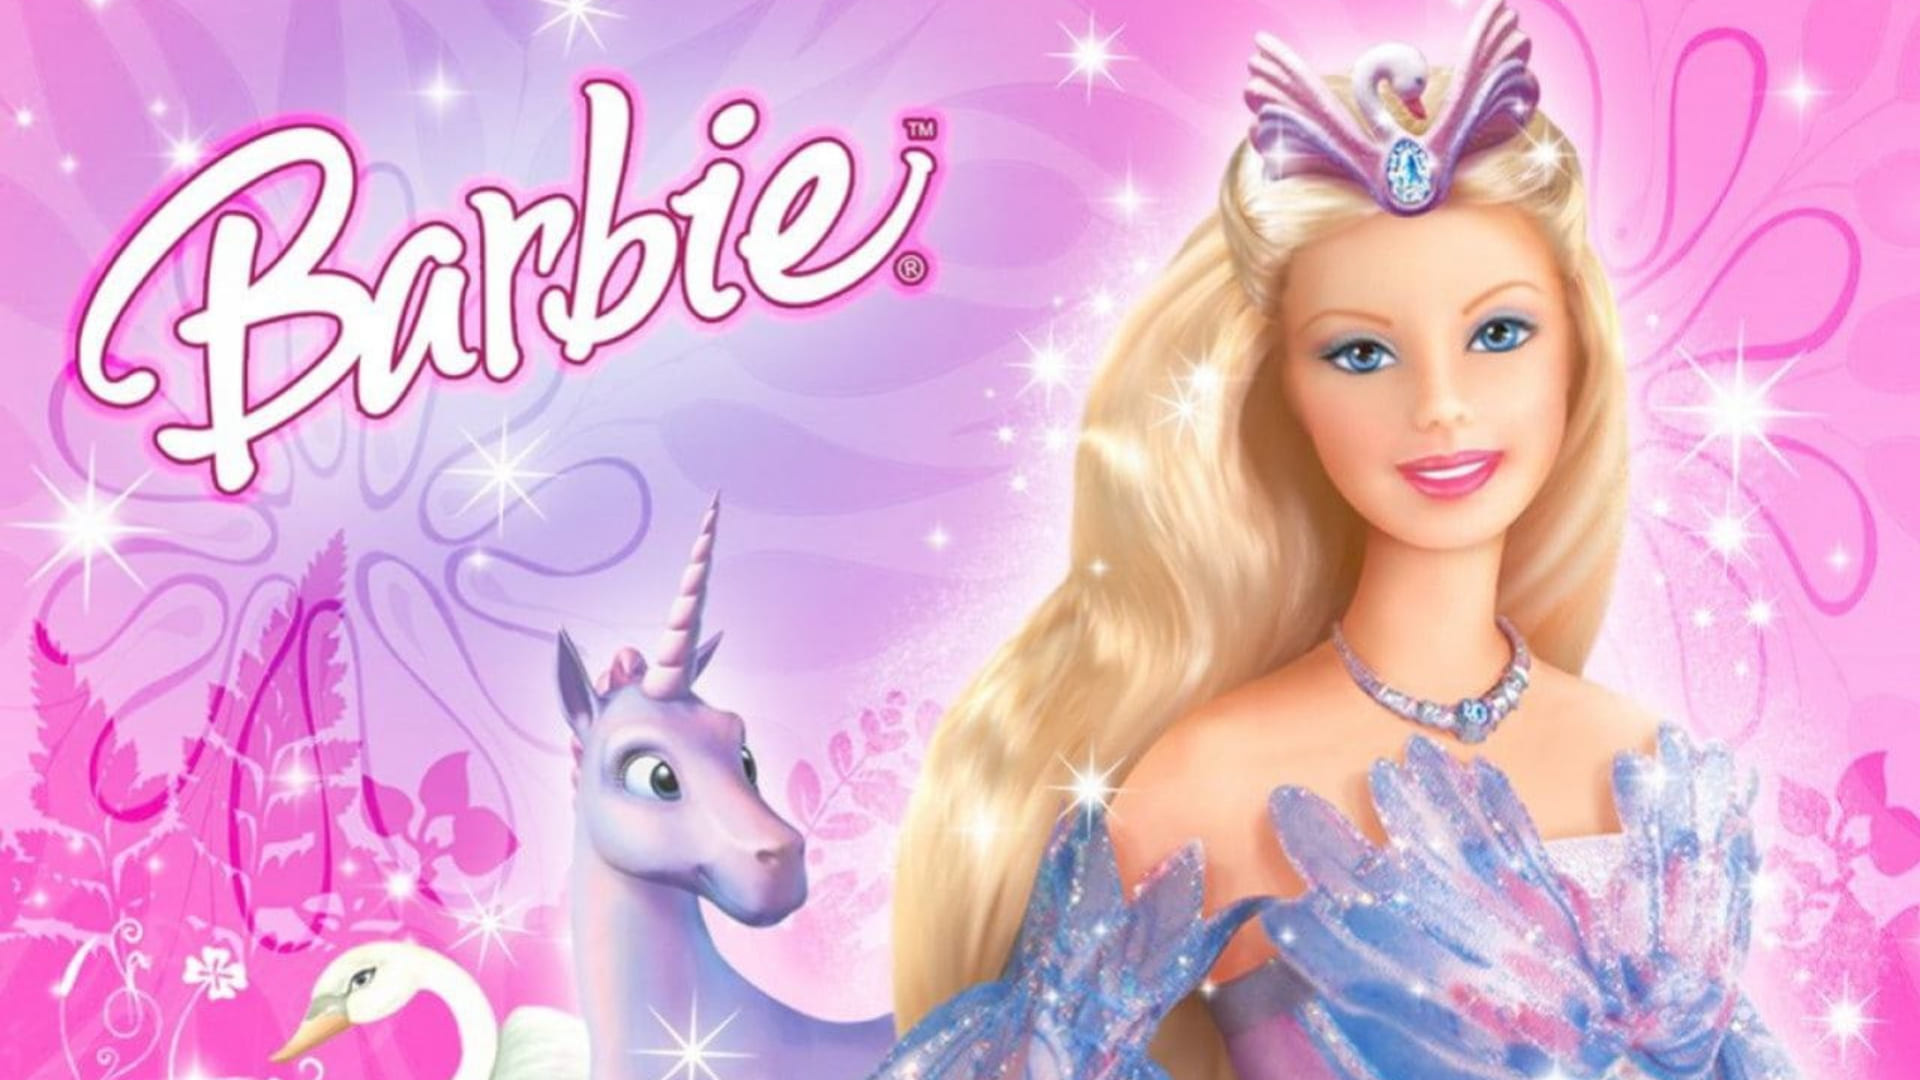 Best Barbie wallpapers, High-quality doll images, Barbie wallpaper download, Barbie doll collection, 1920x1080 Full HD Desktop